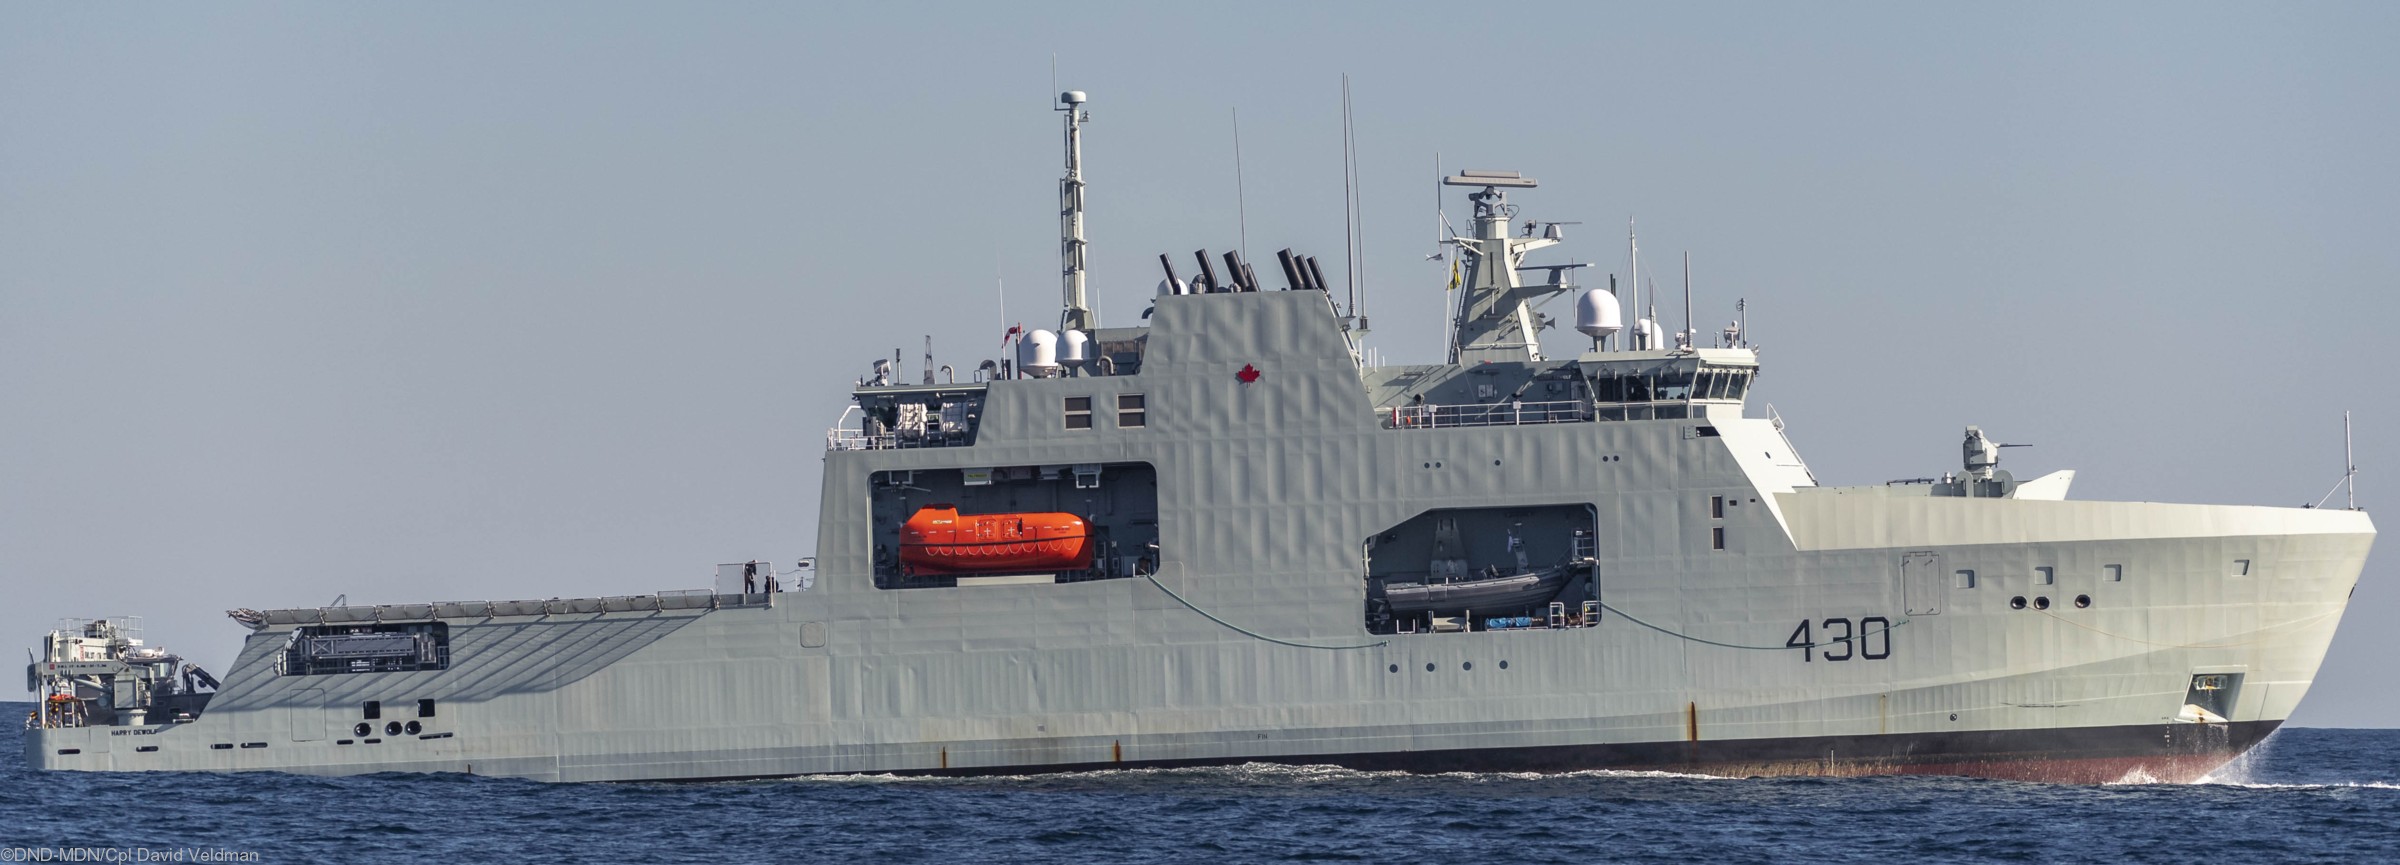 aopv-430 hmcs harry dewolf arctic offshore patrol vessel ncsm royal canadian navy 22